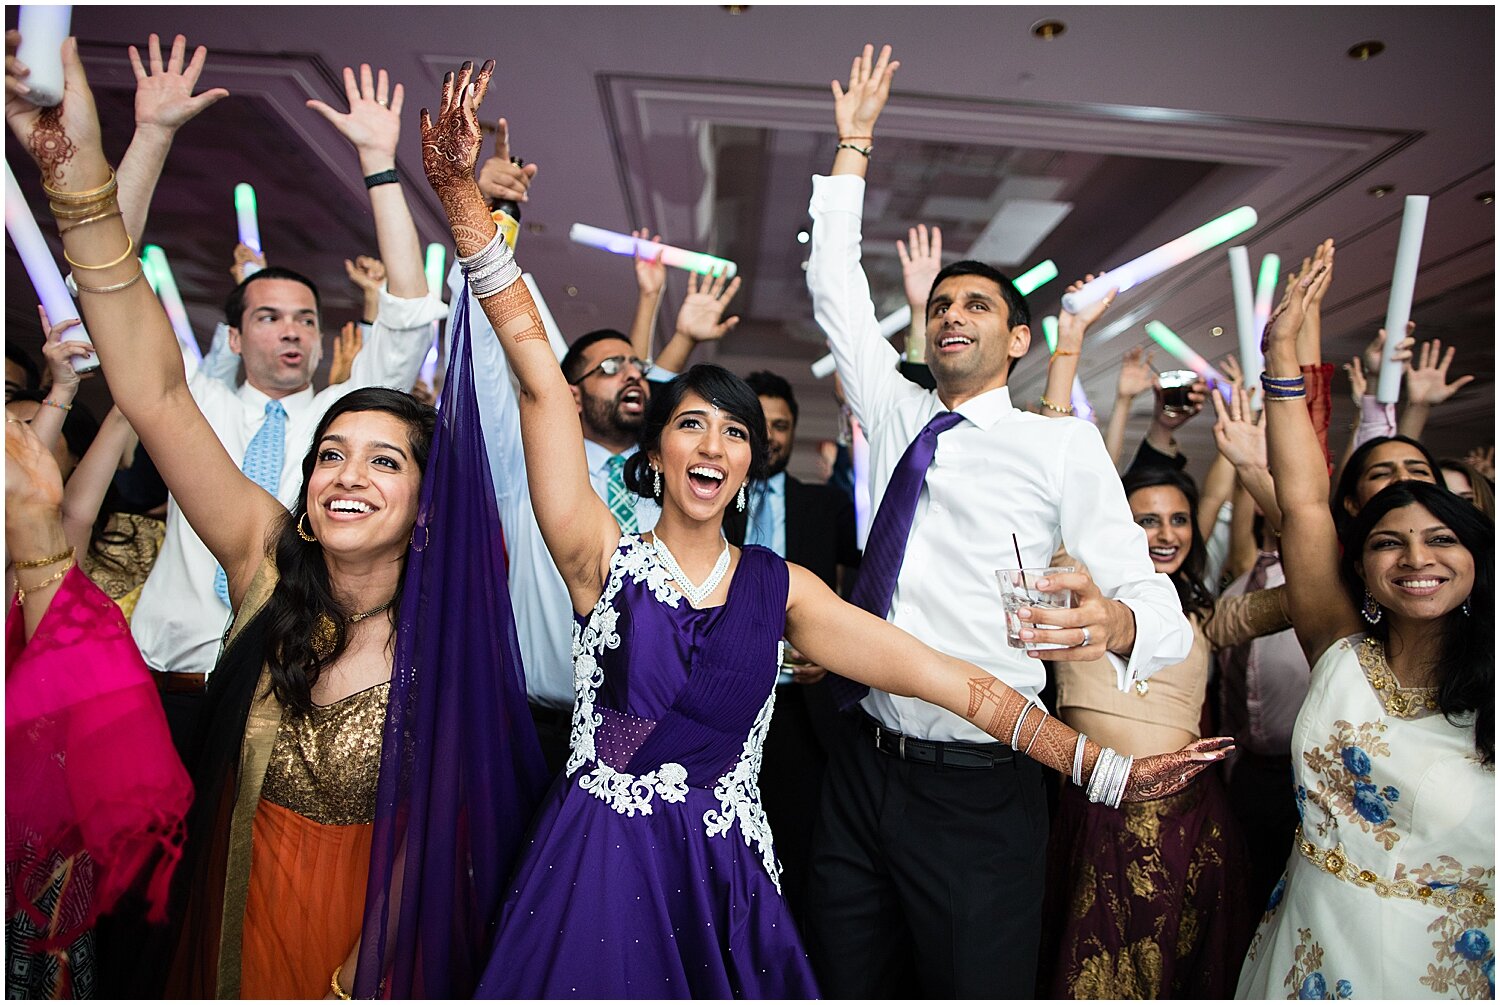  wedding guests having a blast at Indian wedding 